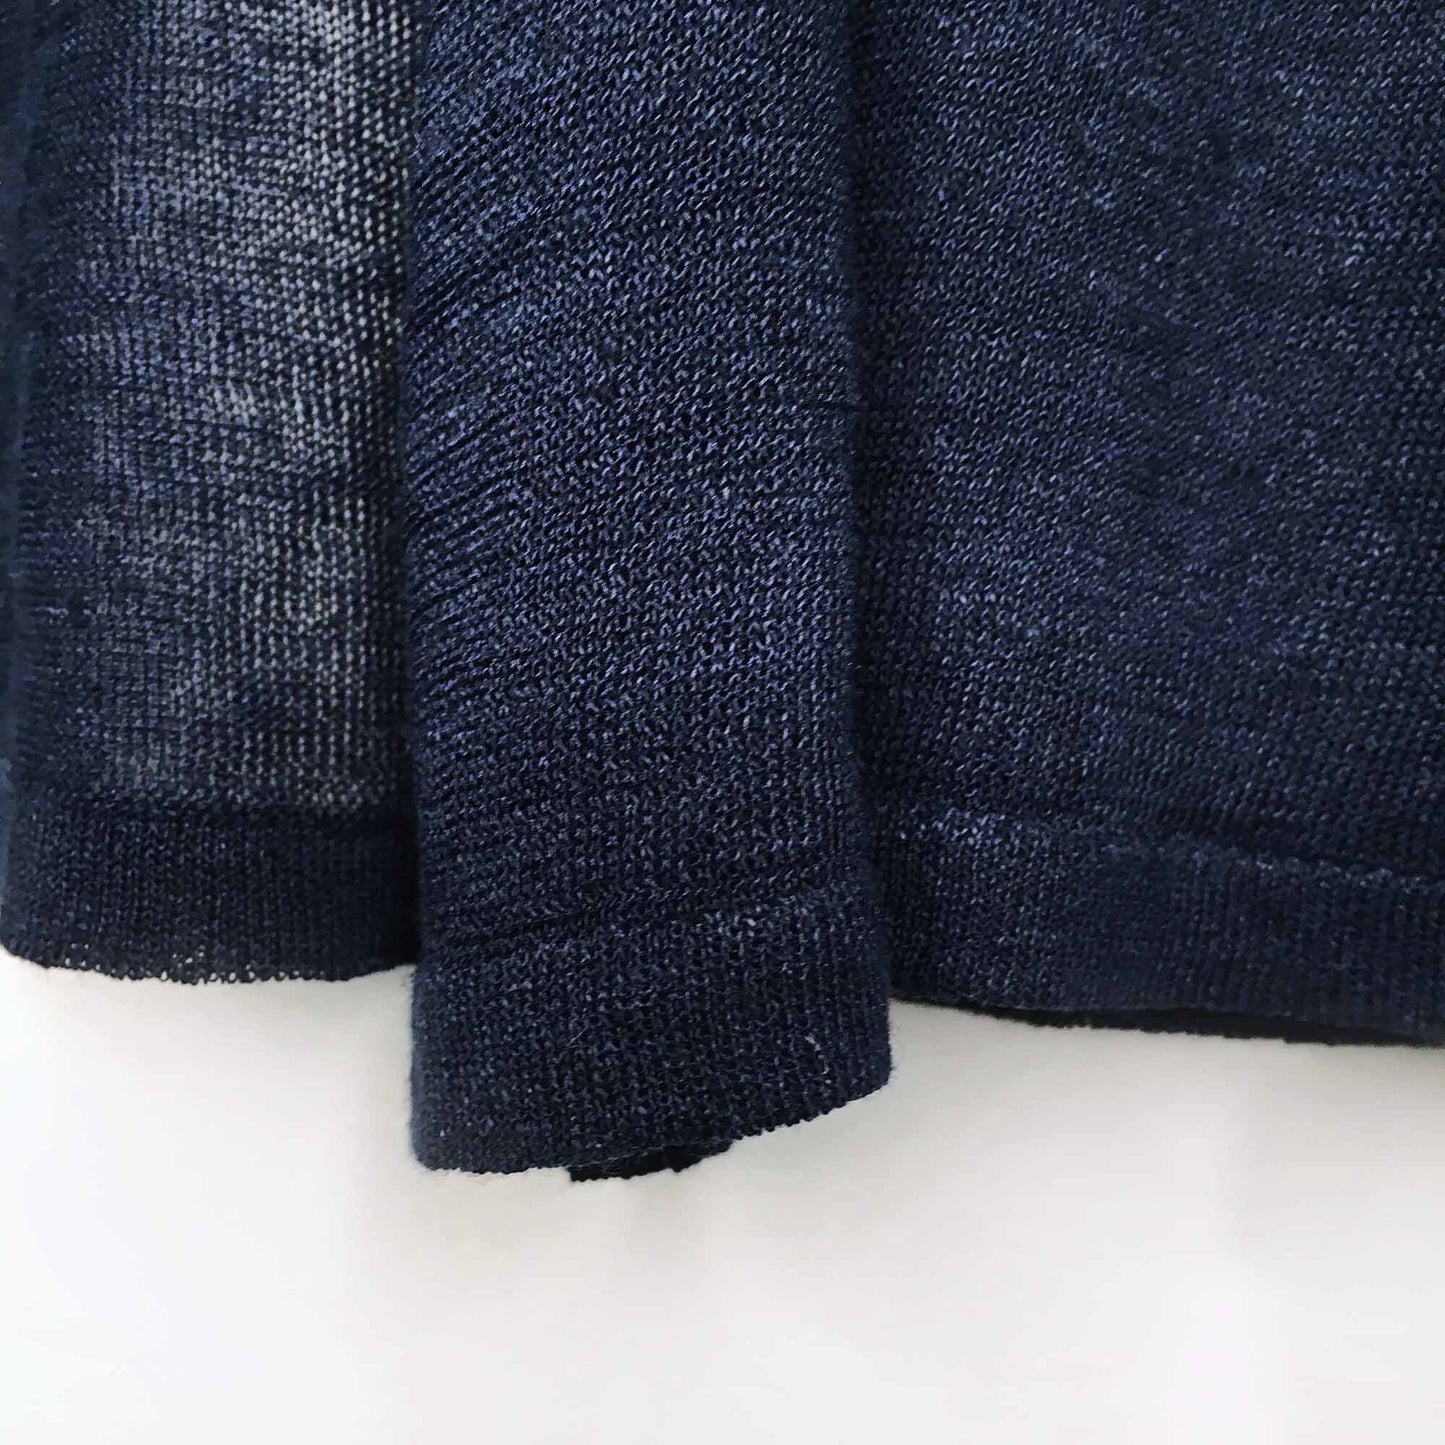 Eileen Fisher 3/4 sleeve linen cropped cardigan - size Medium